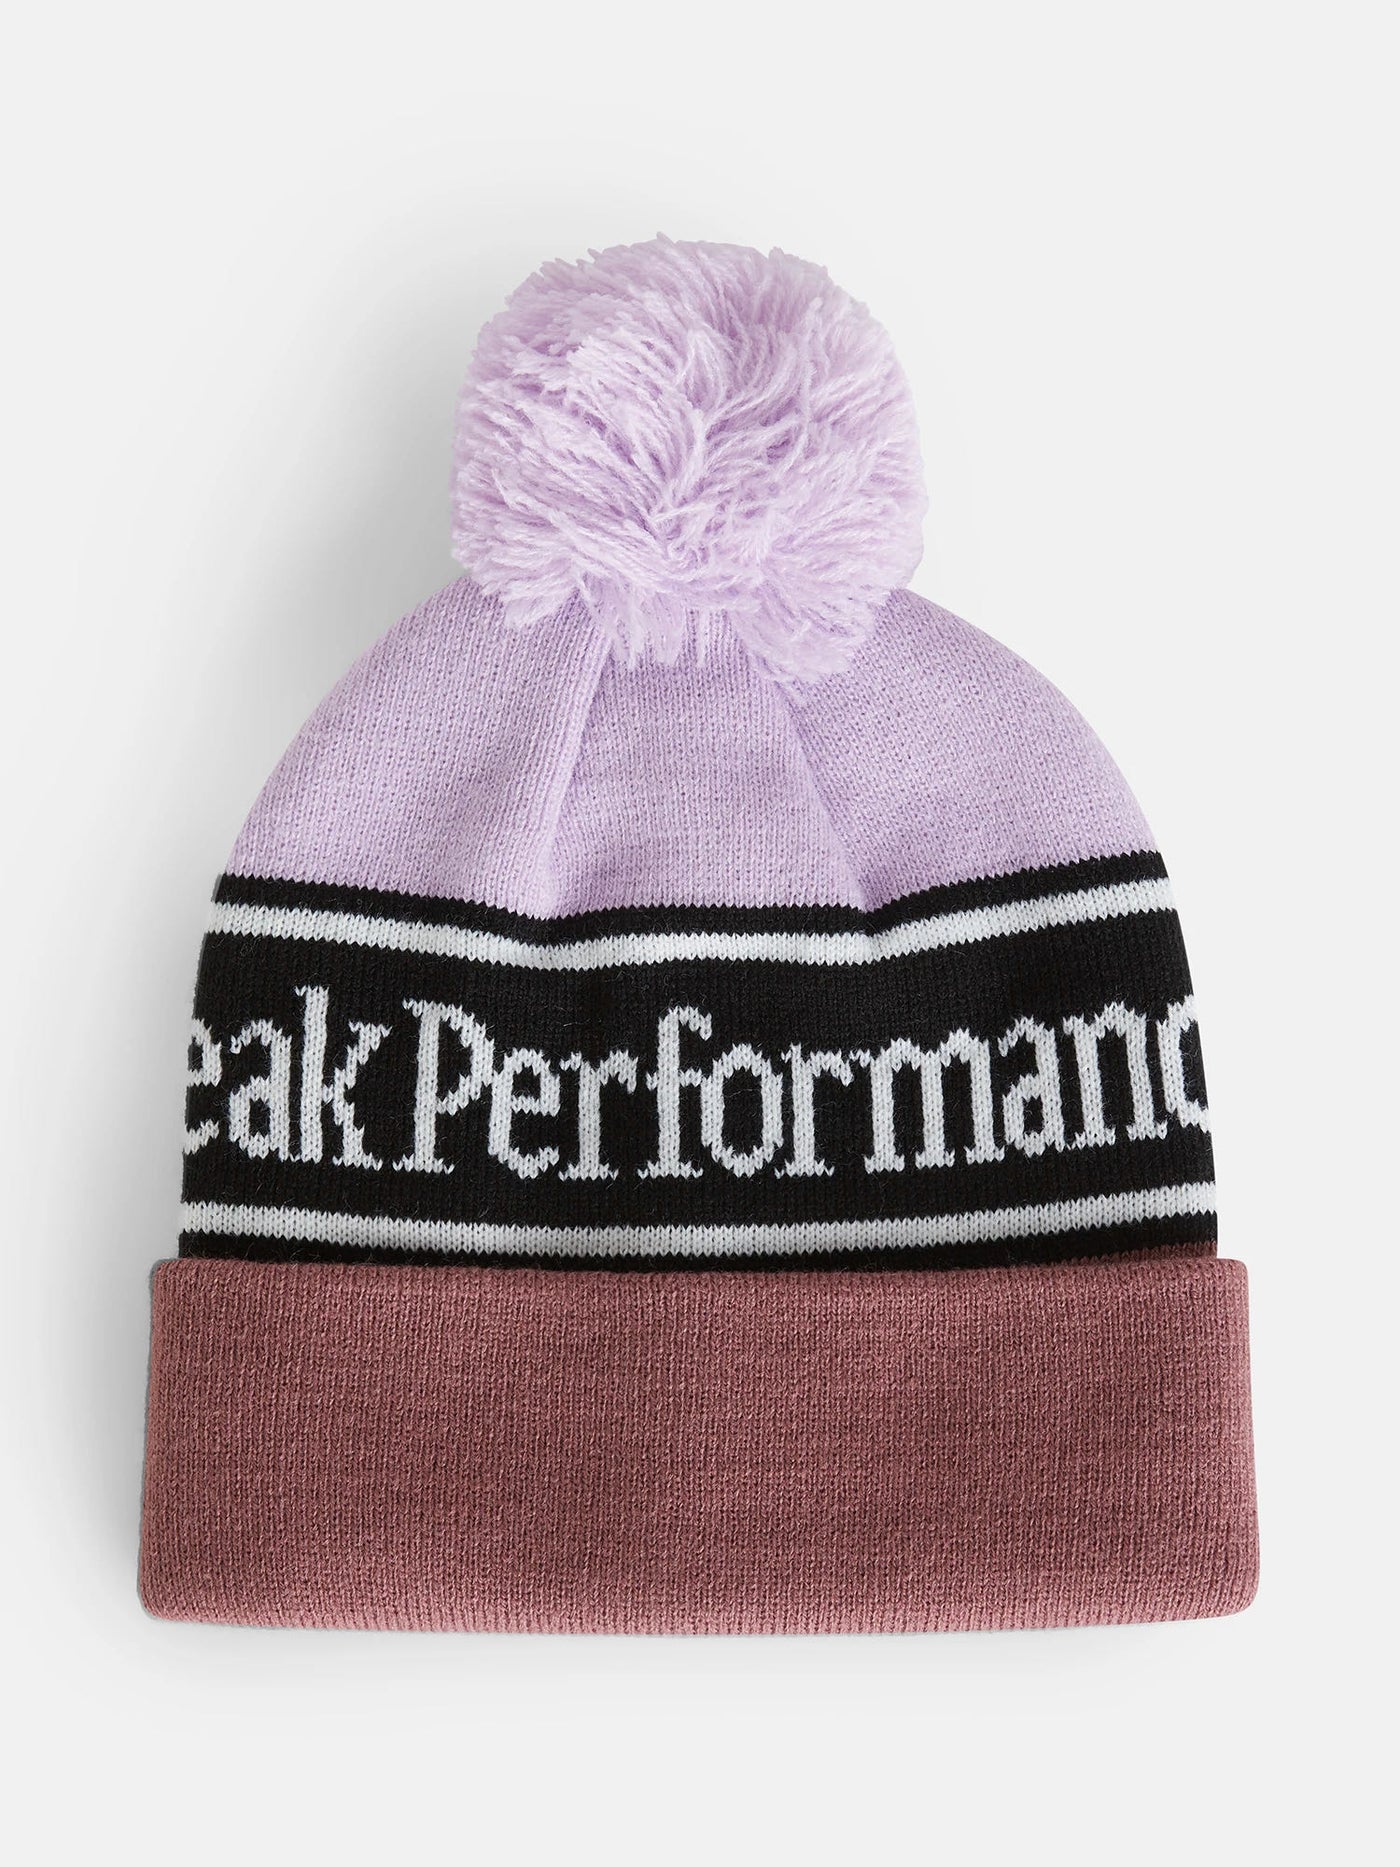 JR Pow Hat Village Ski Hut Peak Performance Hats/Toques/Face, softgoods accessories, Winter 2023